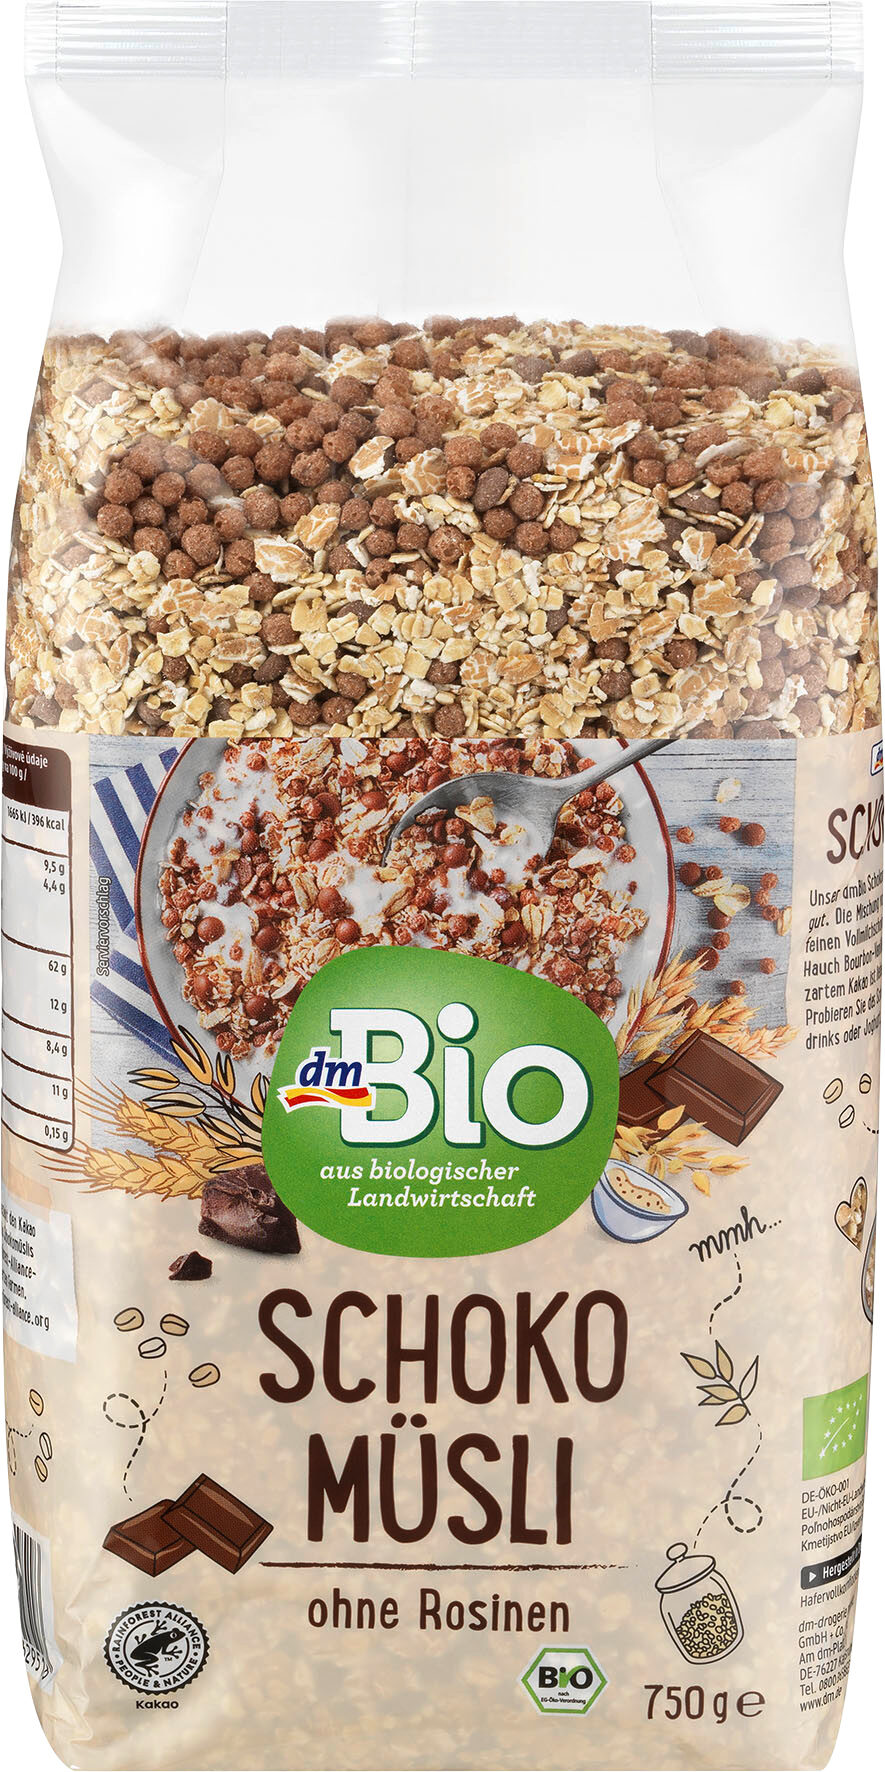 Schoko Müsli ohne Rosinen - Produkt